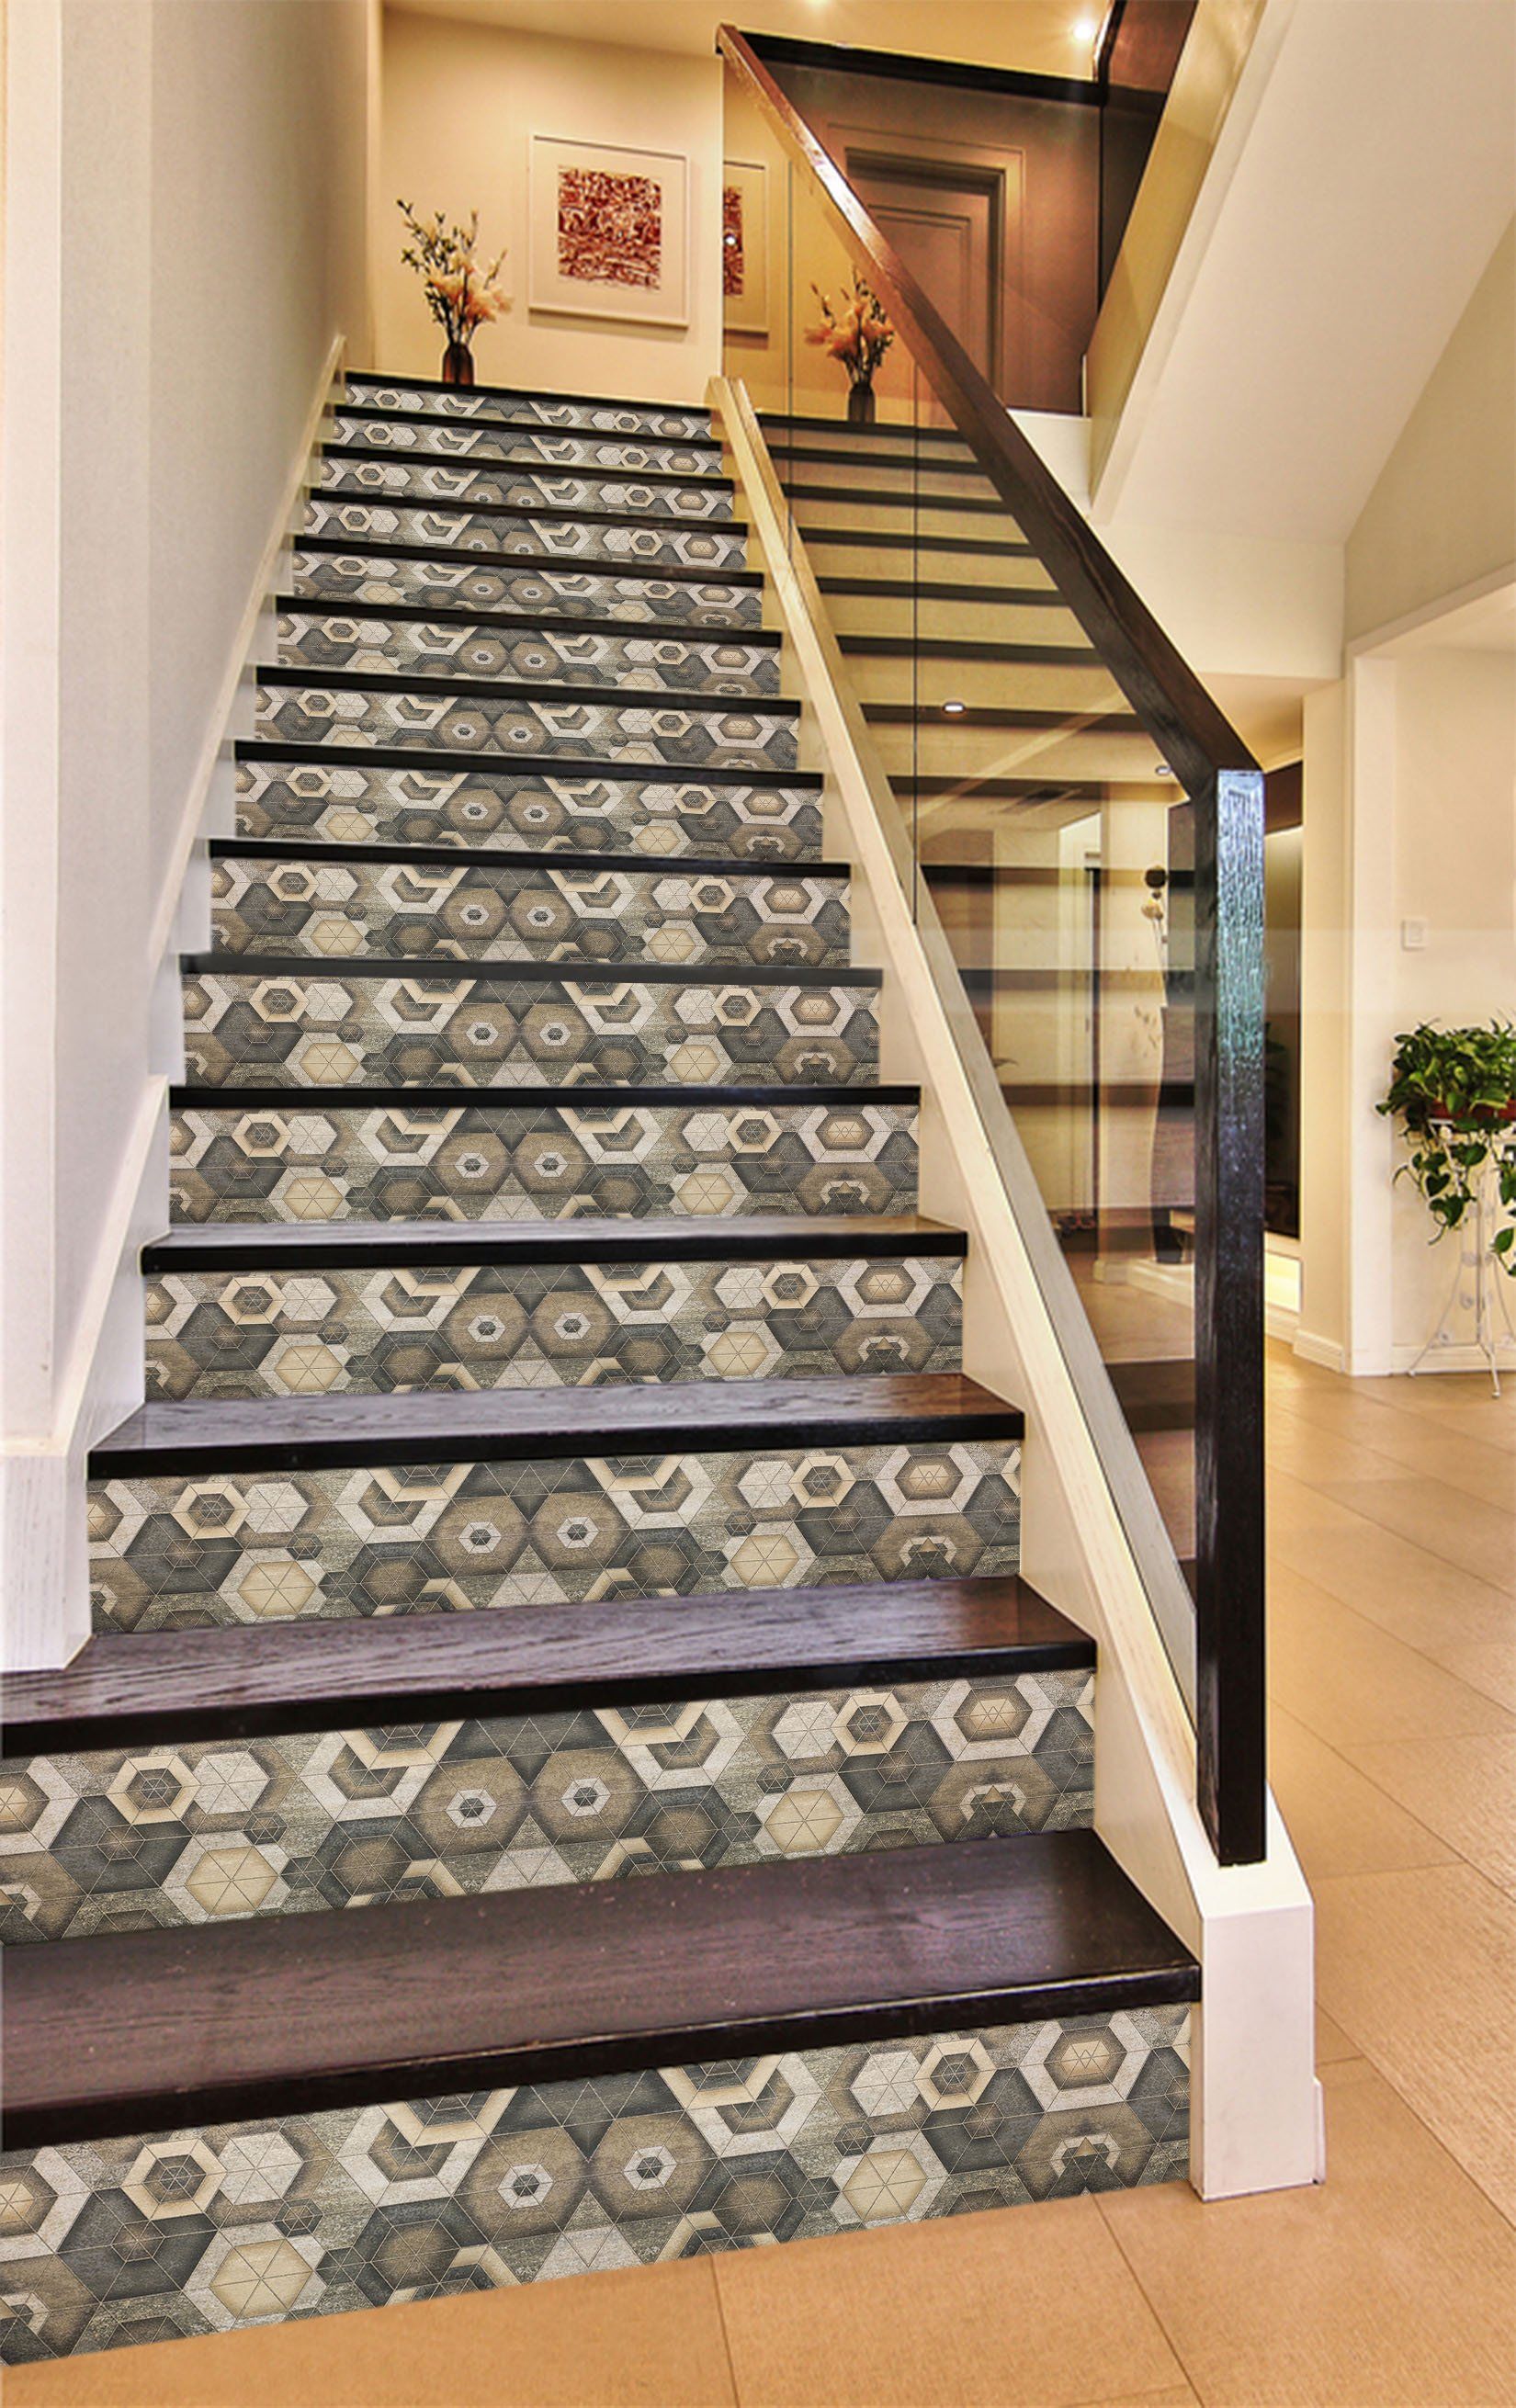 3D Free Graphics 56978 Marble Tile Texture Stair Risers Wallpaper AJ Wallpaper 